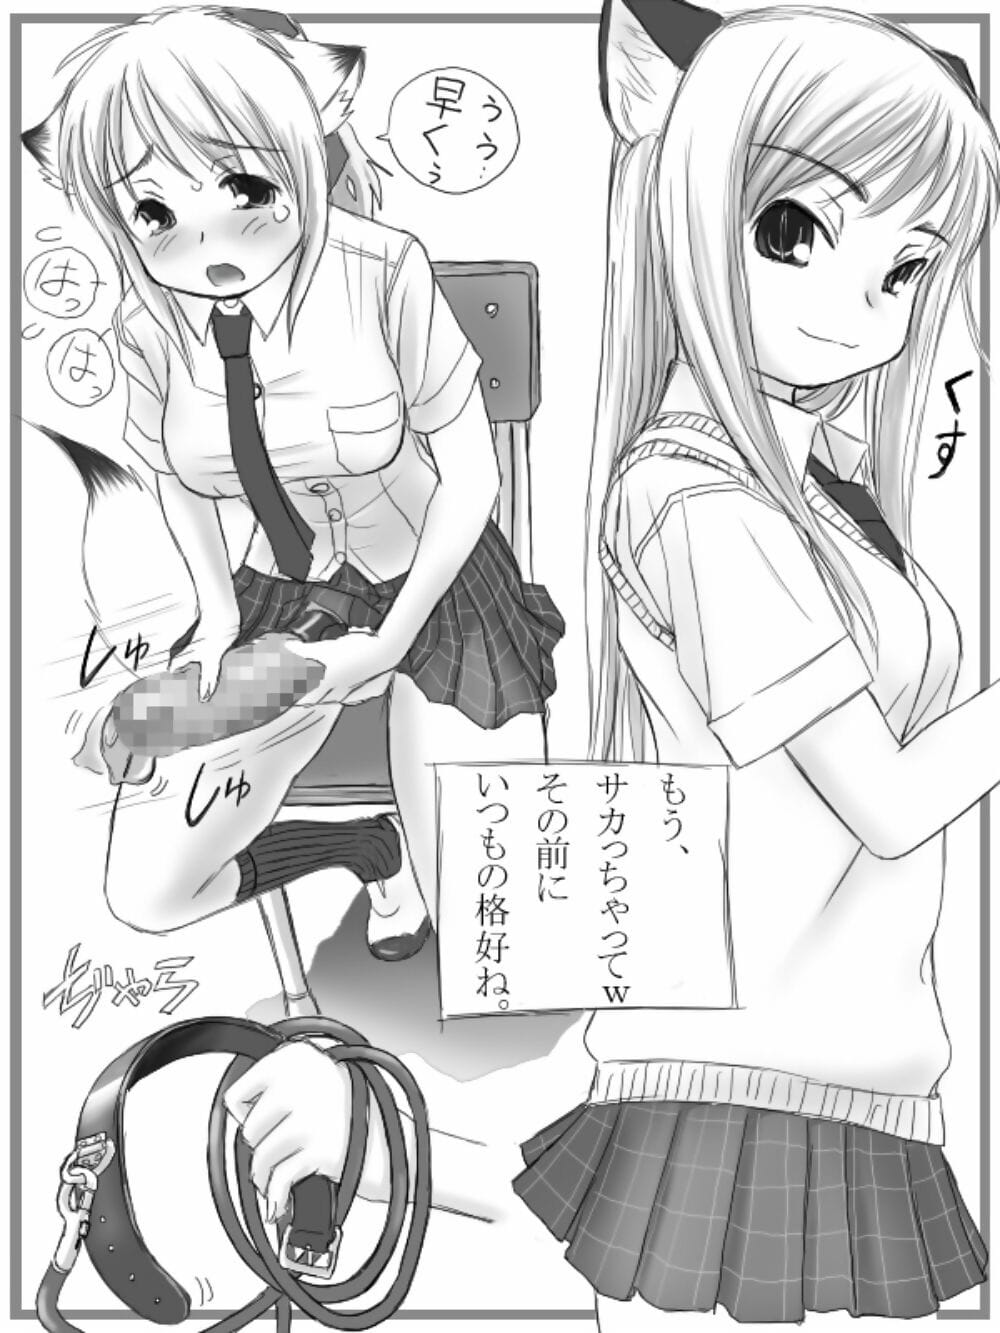 moi garou moi Futanari san illustration shuu + omake manga numérique PARTIE 5